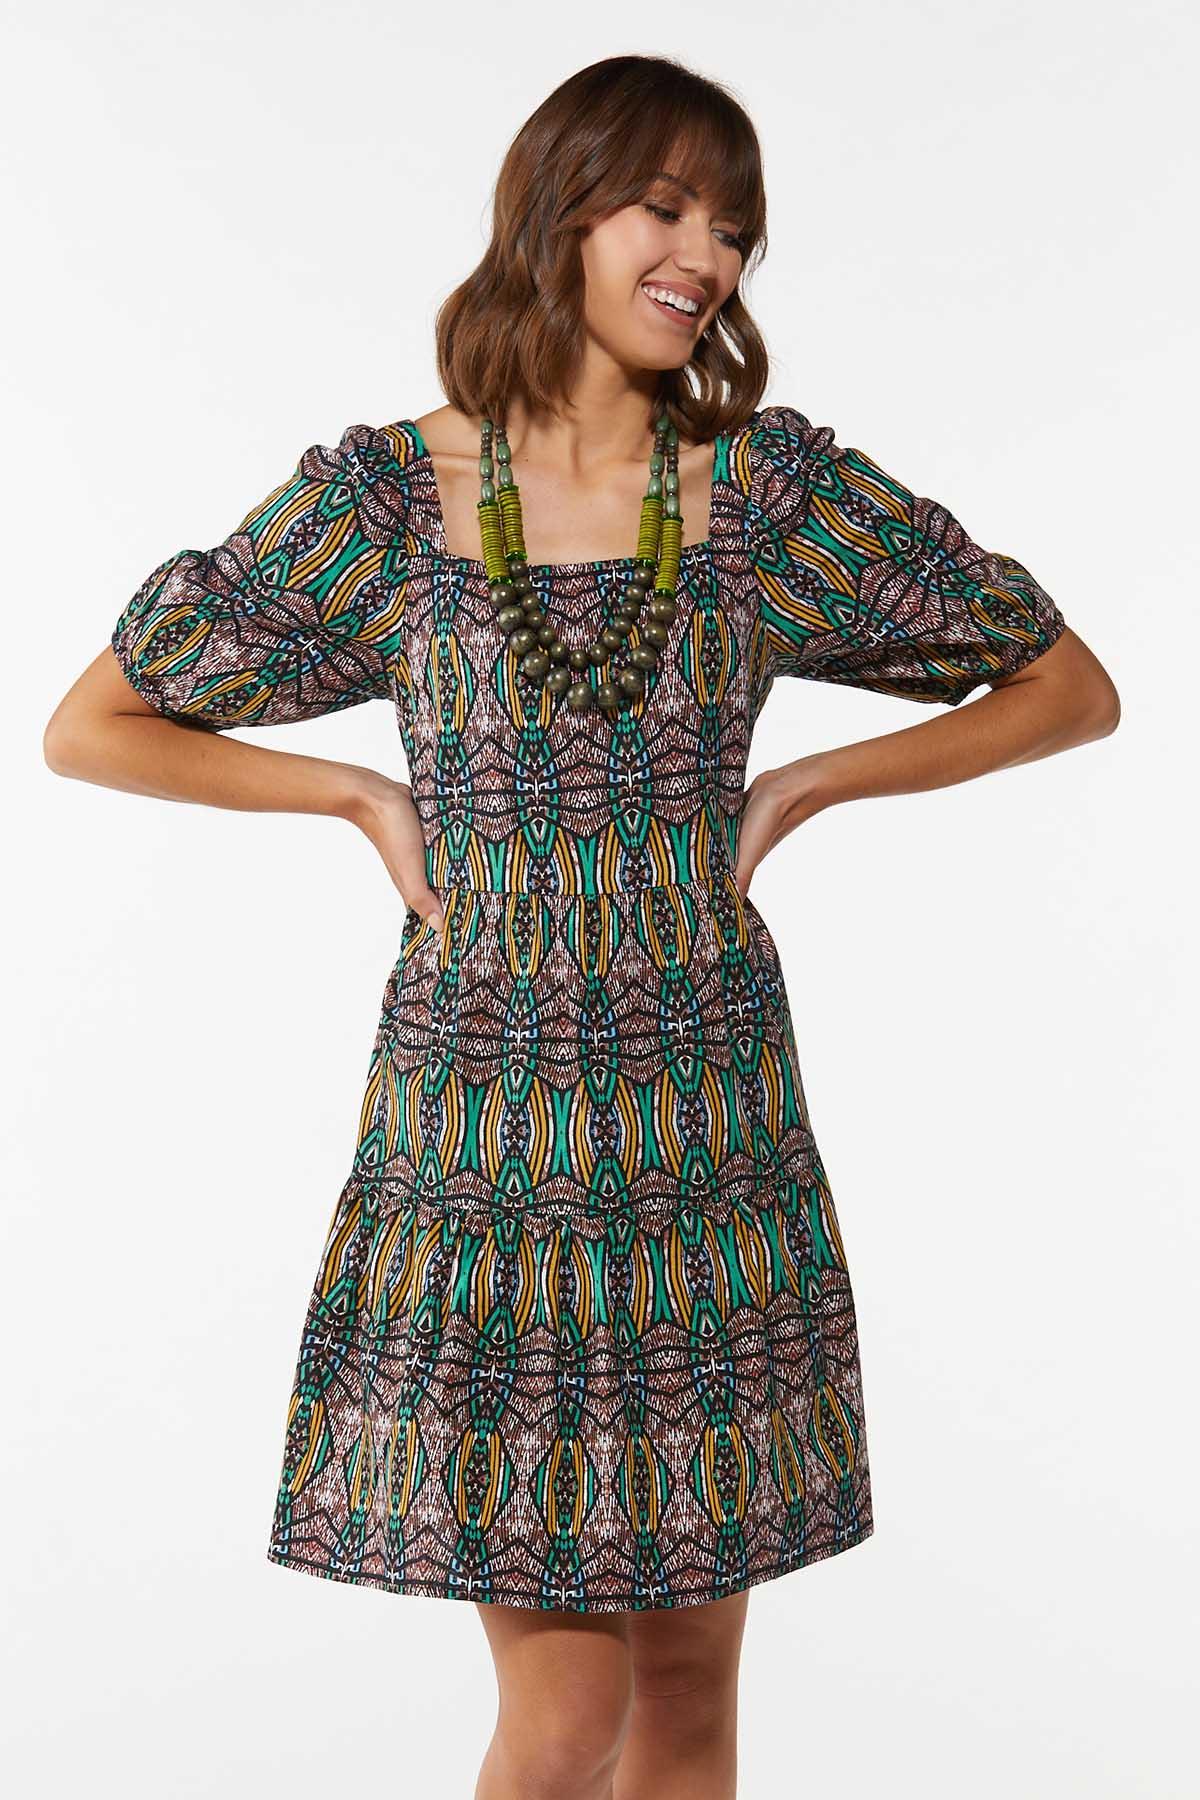 Aztec Print Dress